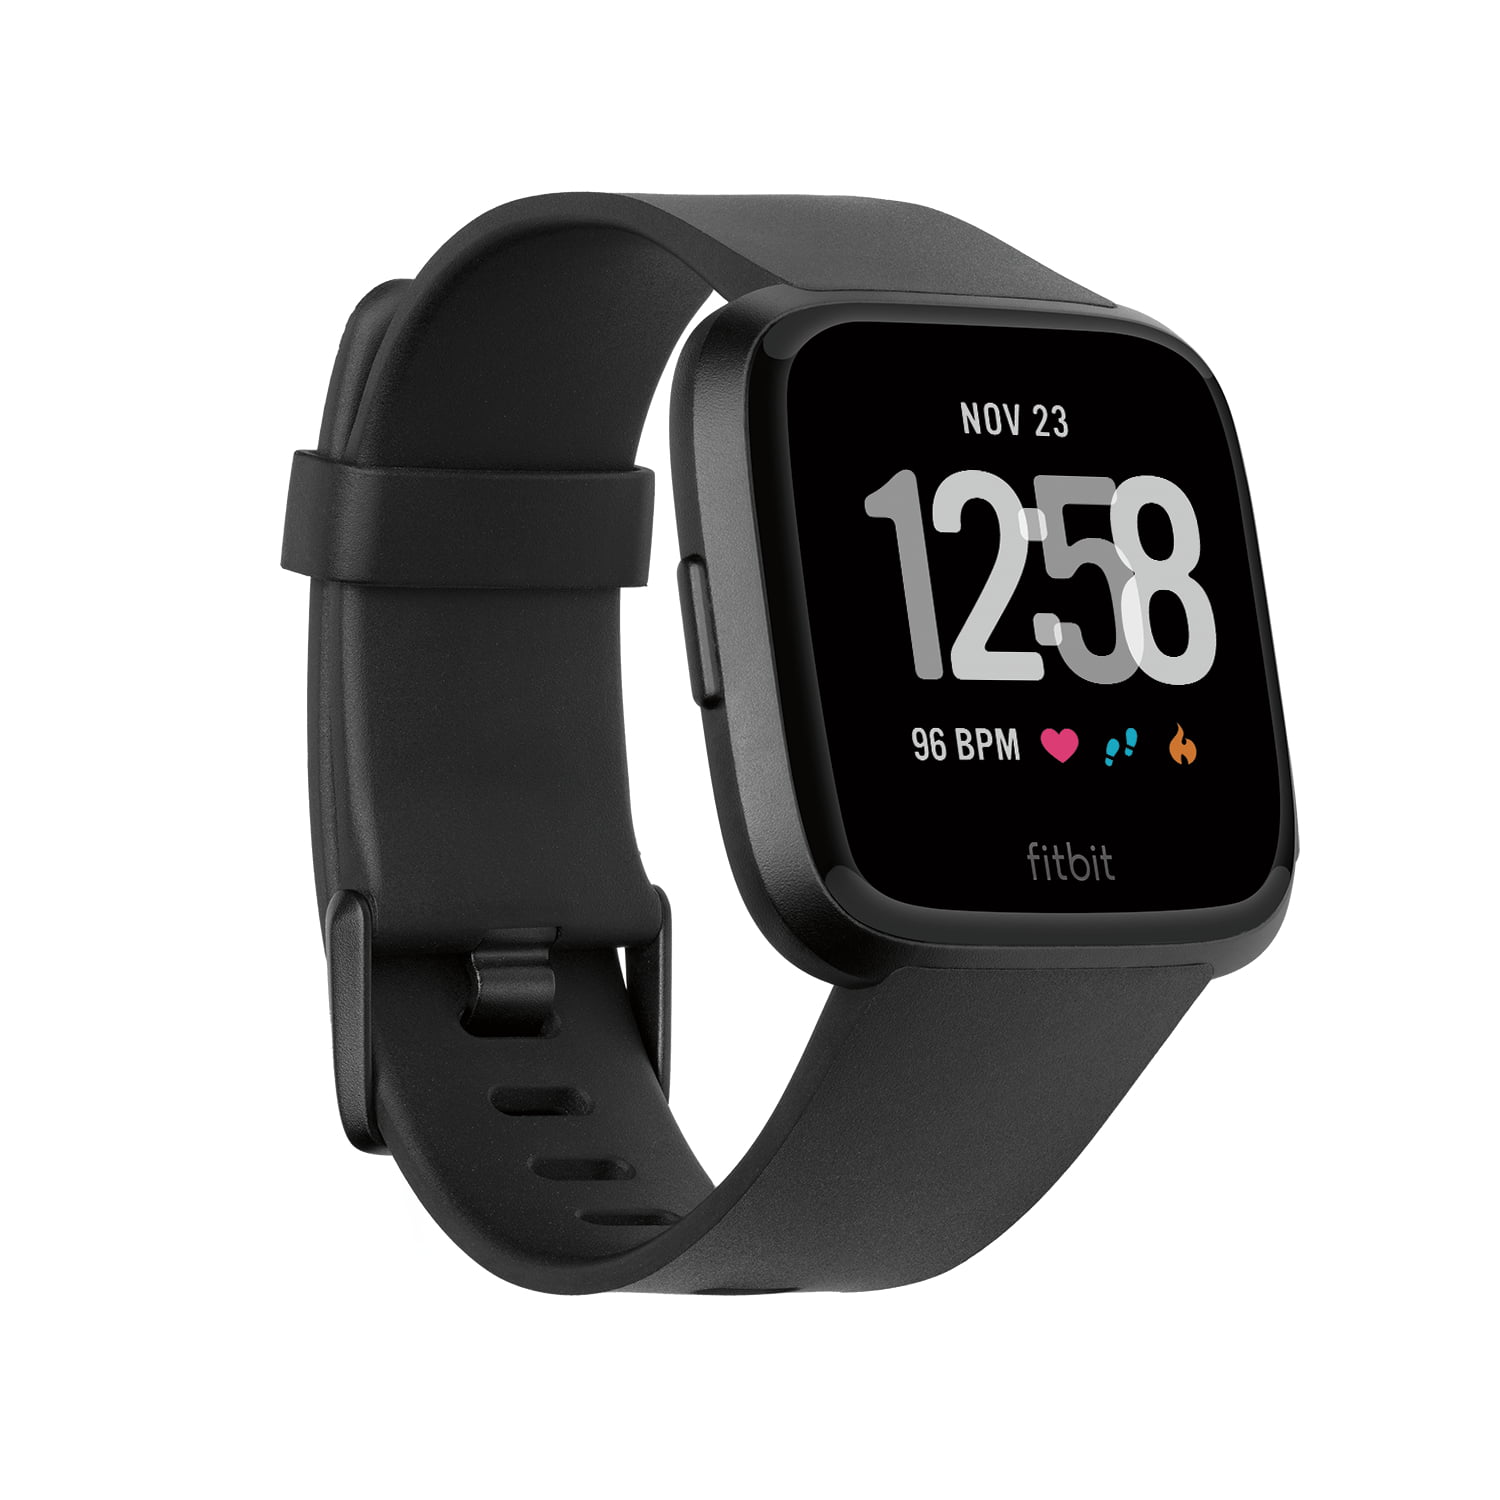 Fitbit Versa Smartwatch - Walmart.com - Walmart.com